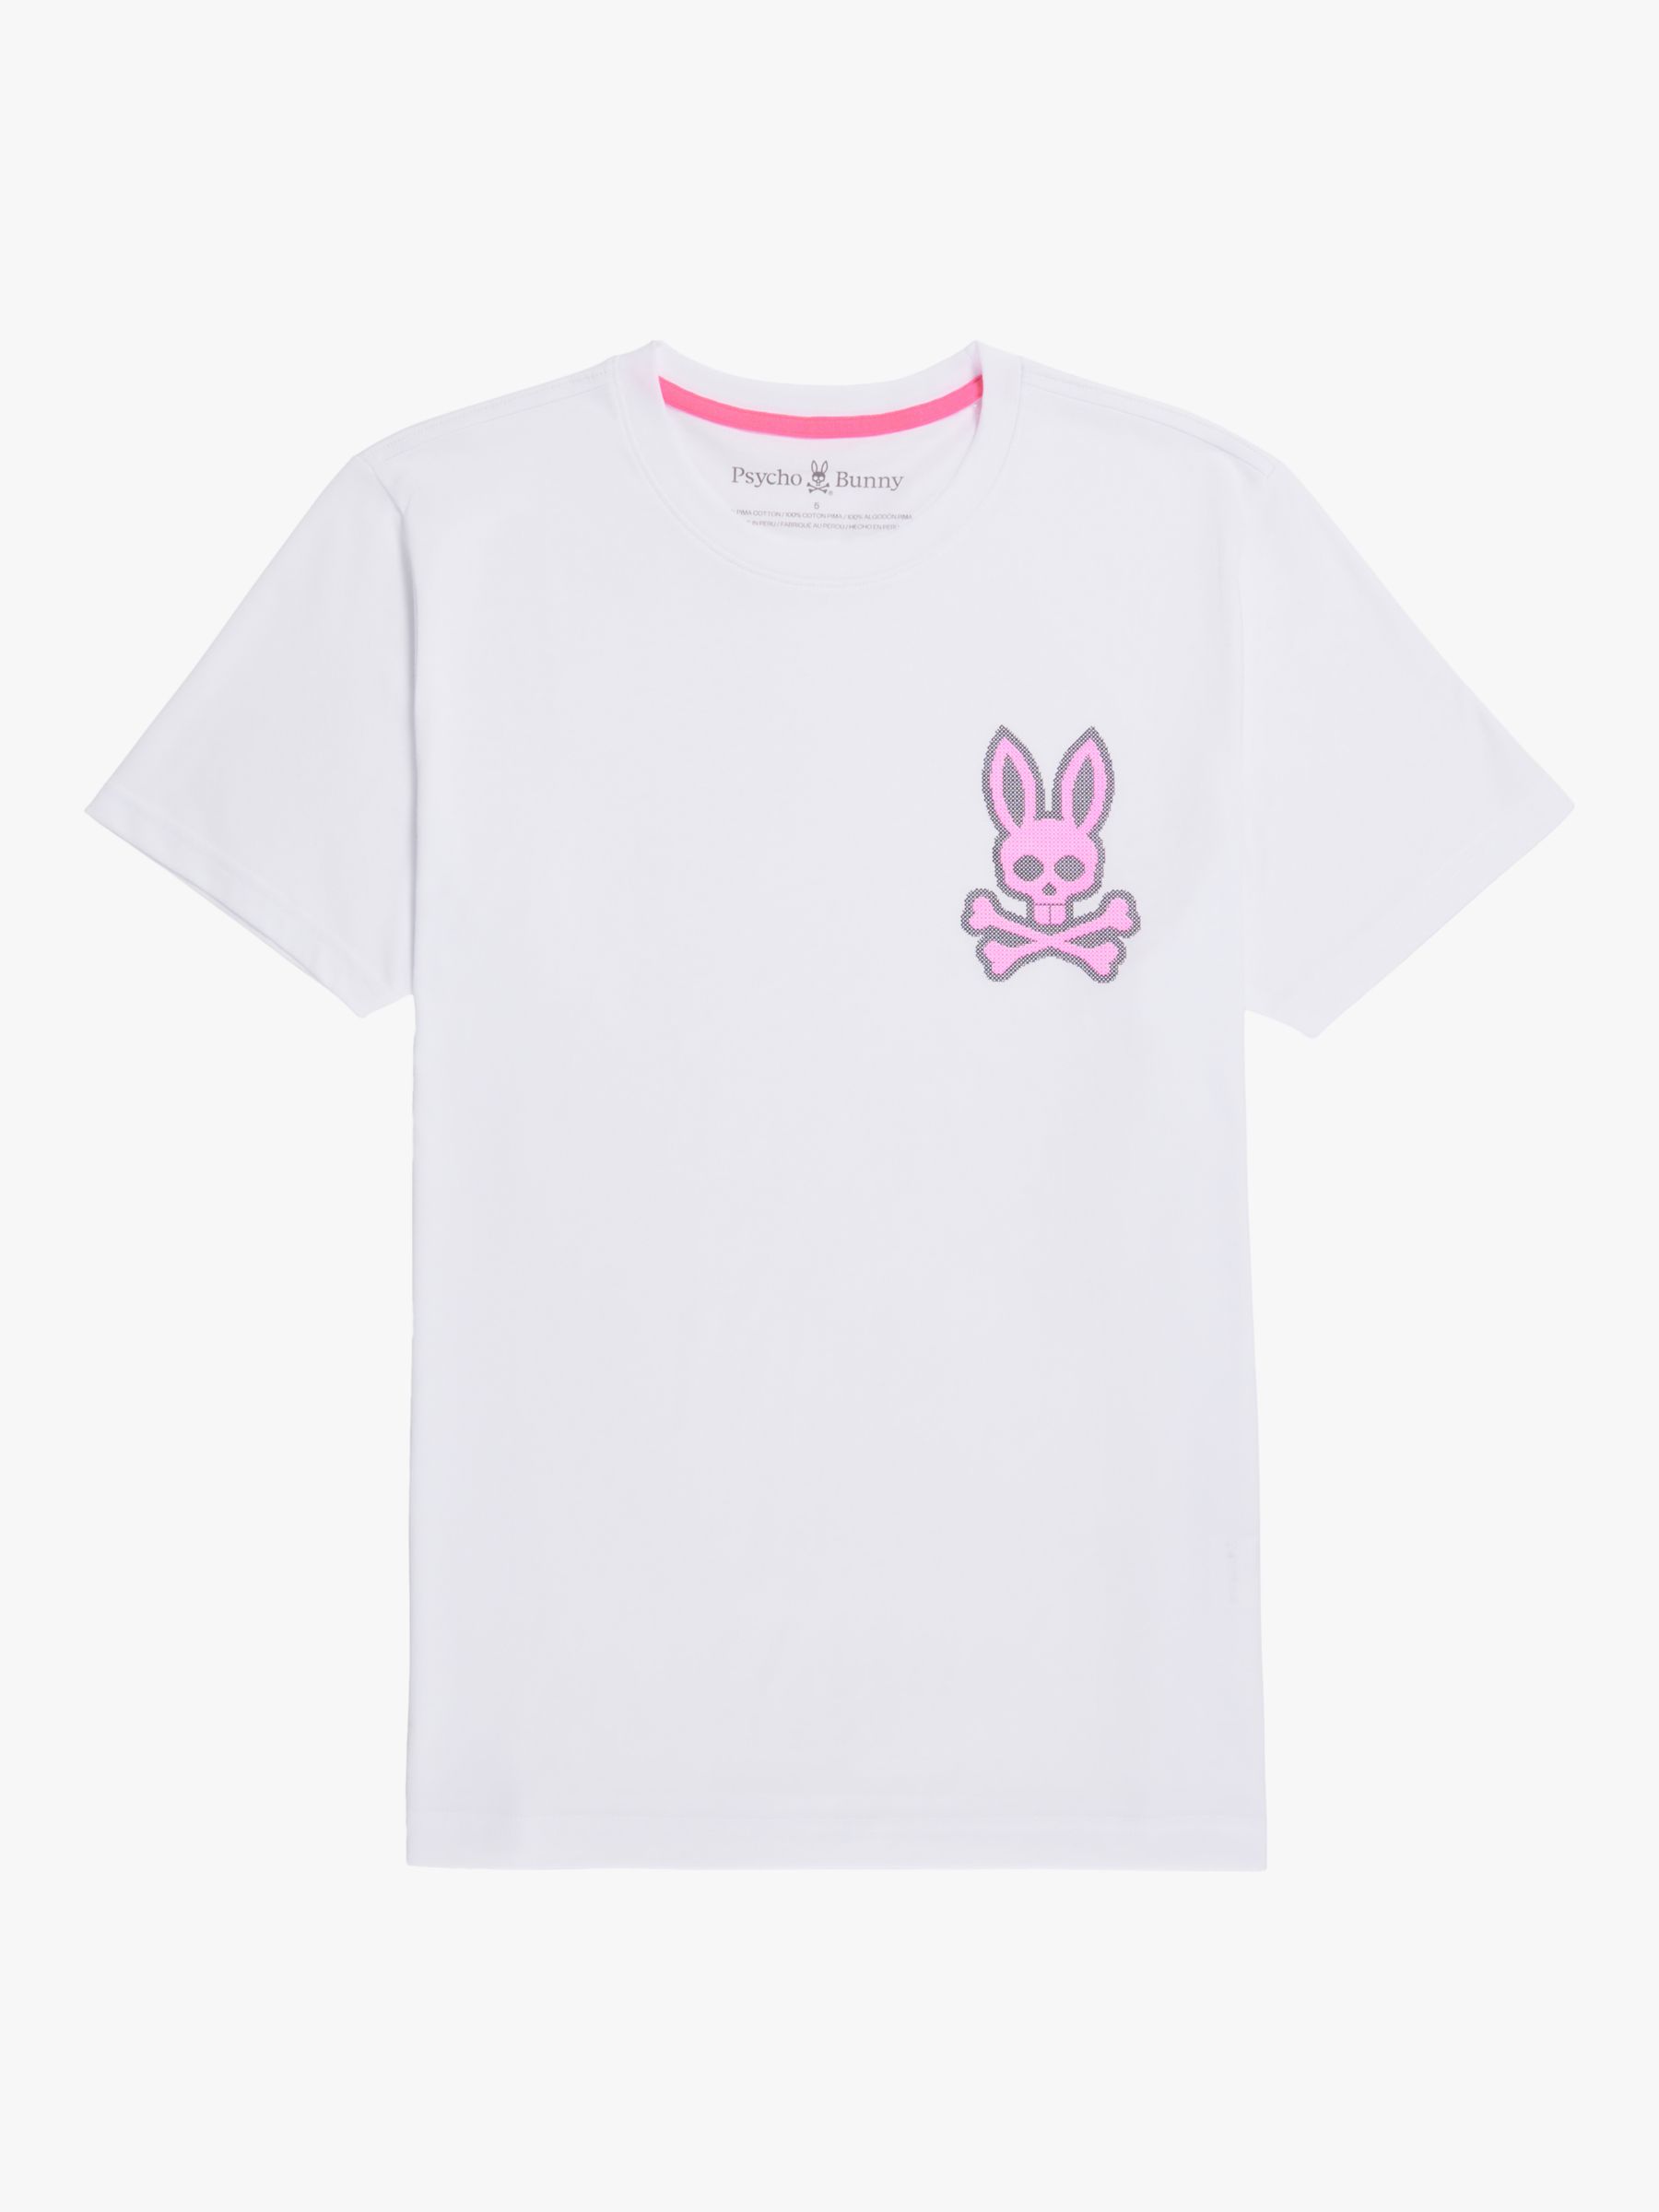 Psycho Bunny Lancaster Cross Bunny T-Shirt, White, S